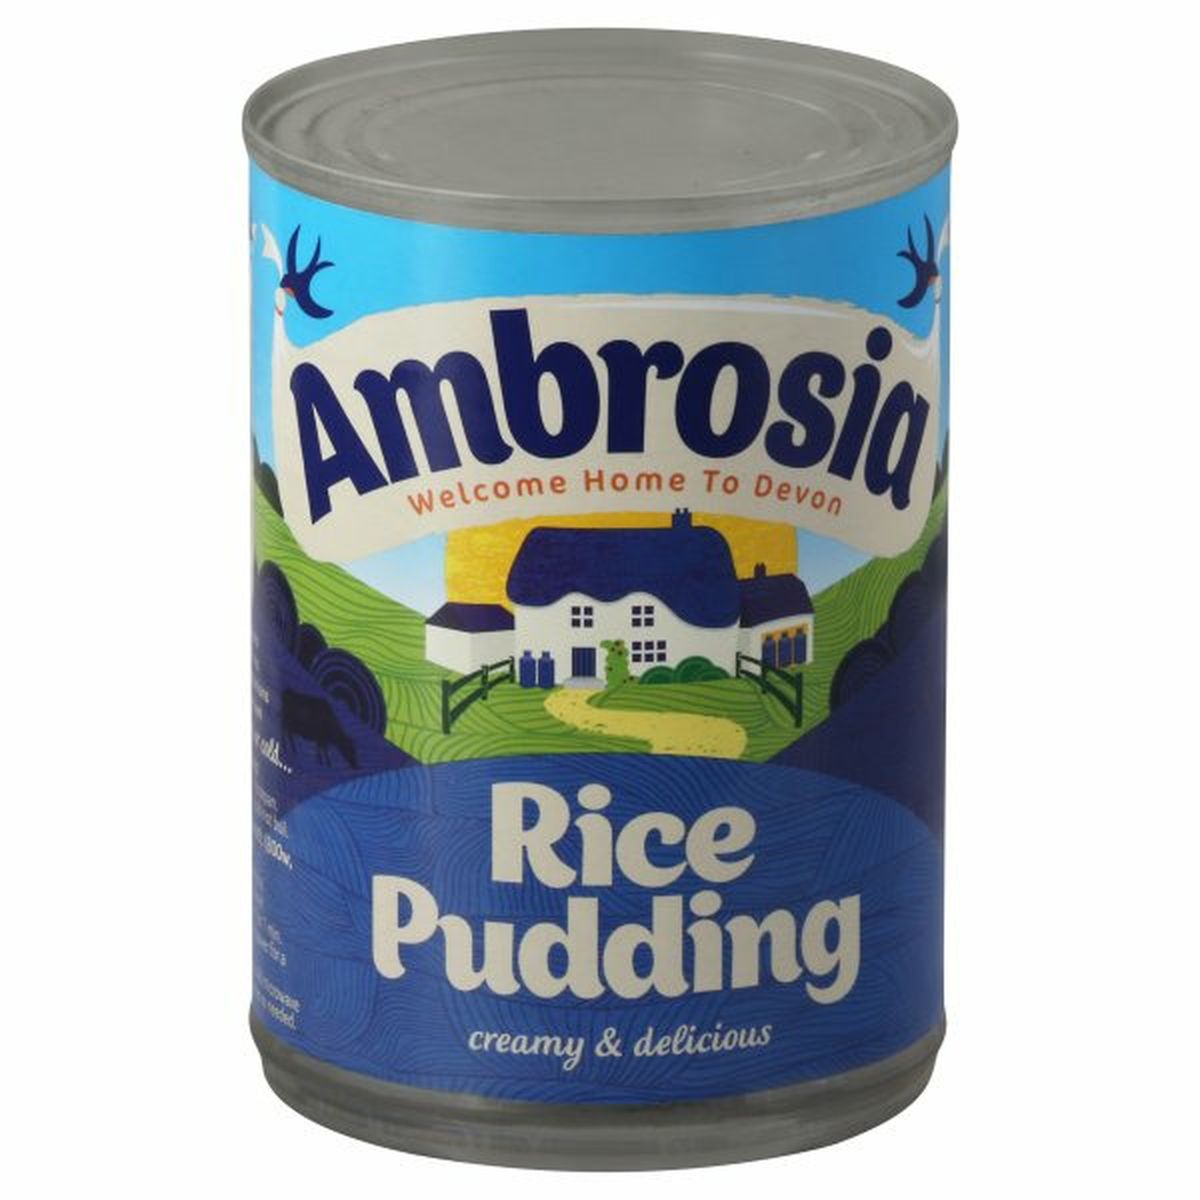 Calories in Ambrosia Rice Pudding